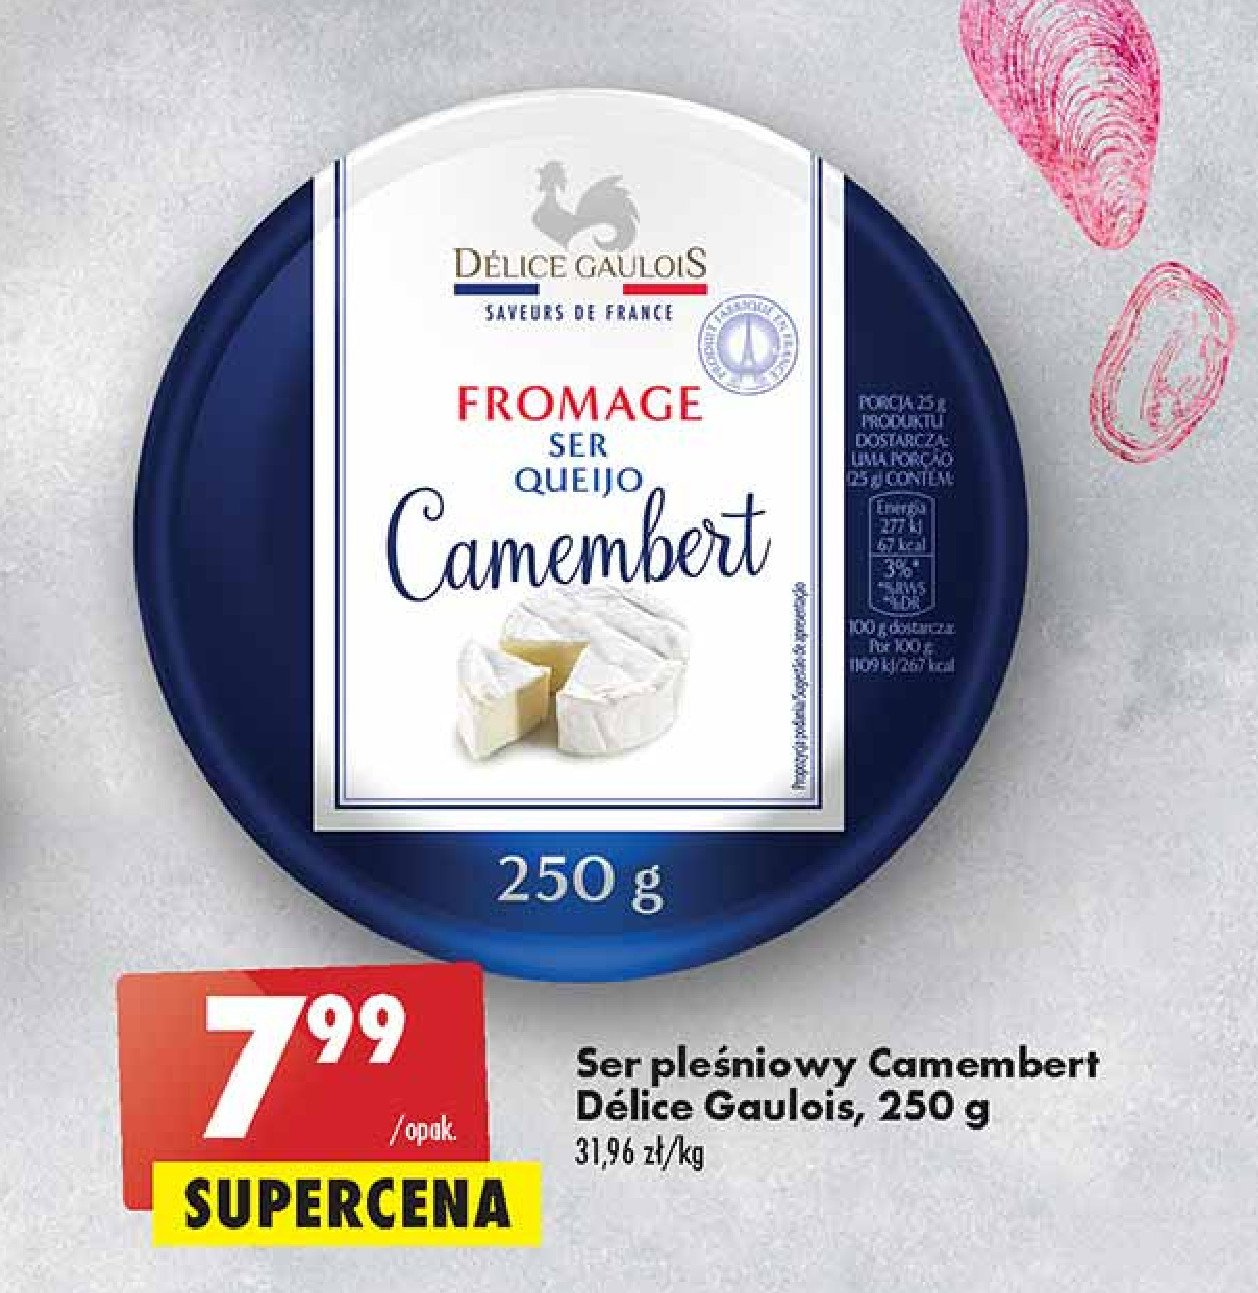 Ser pleśniowy camembert Delice gaulois promocje